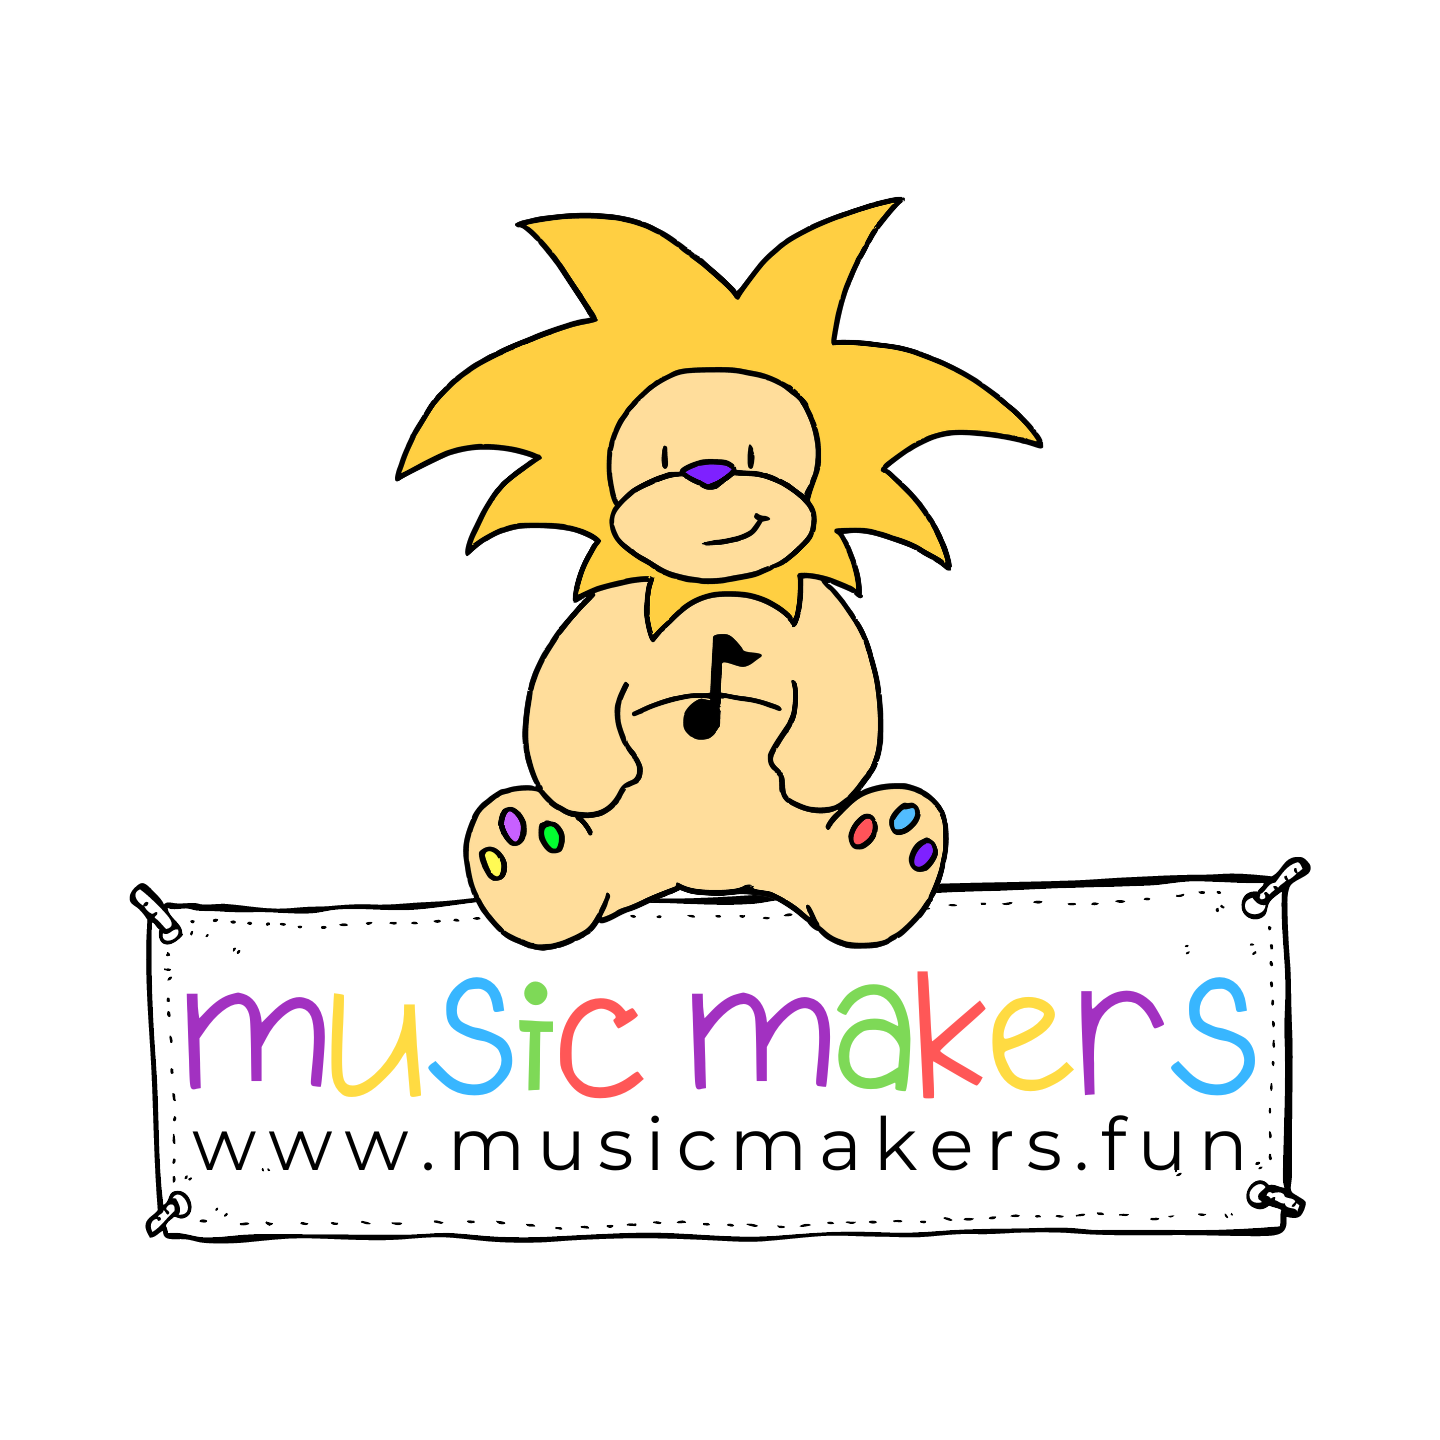 Music Makers's logo